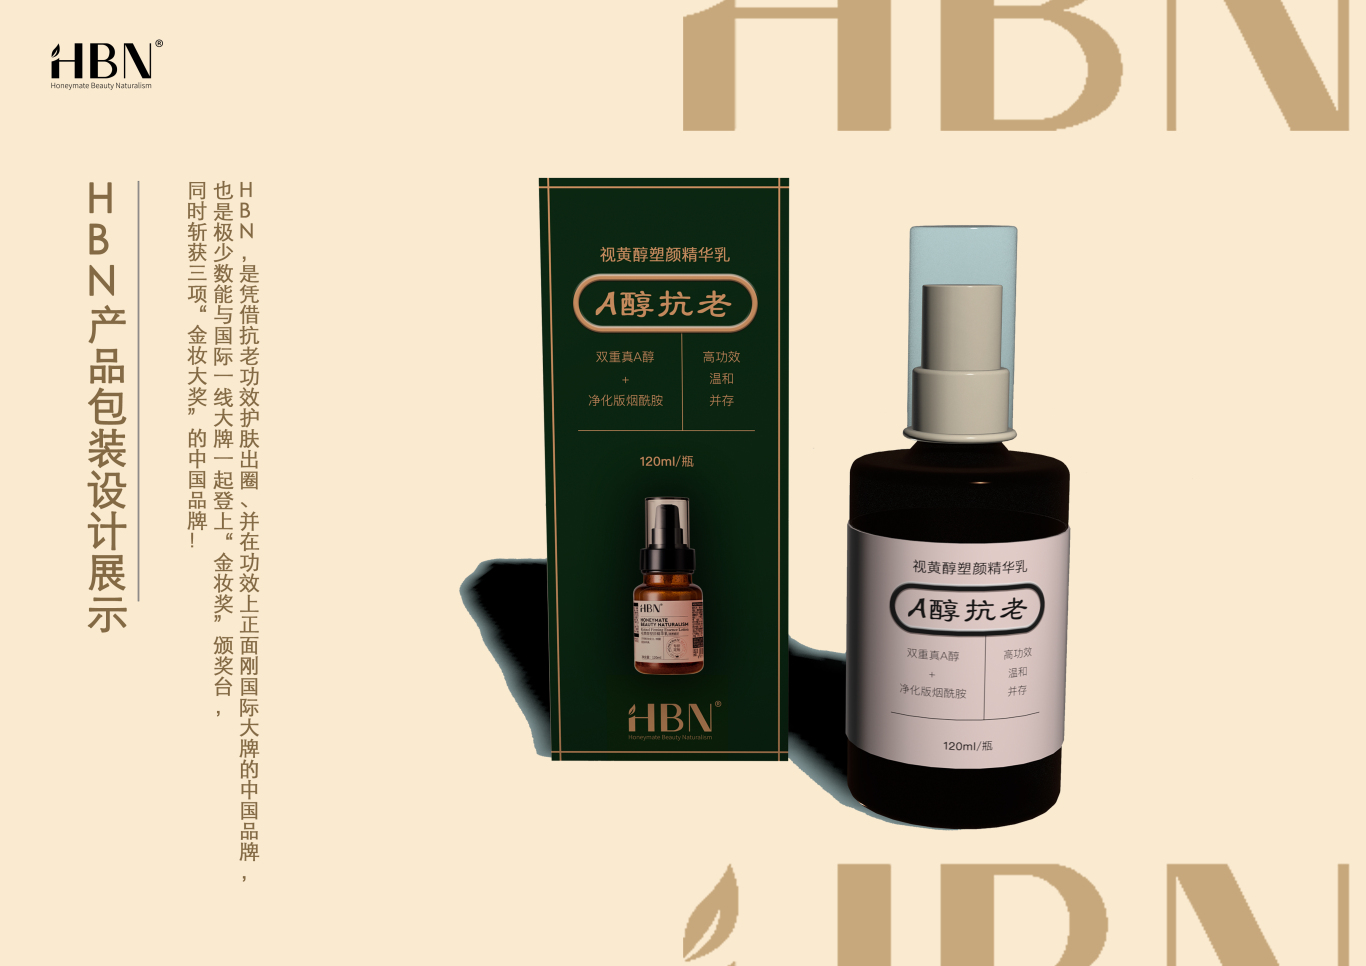 HBN抗老化妝品包裝設計圖1